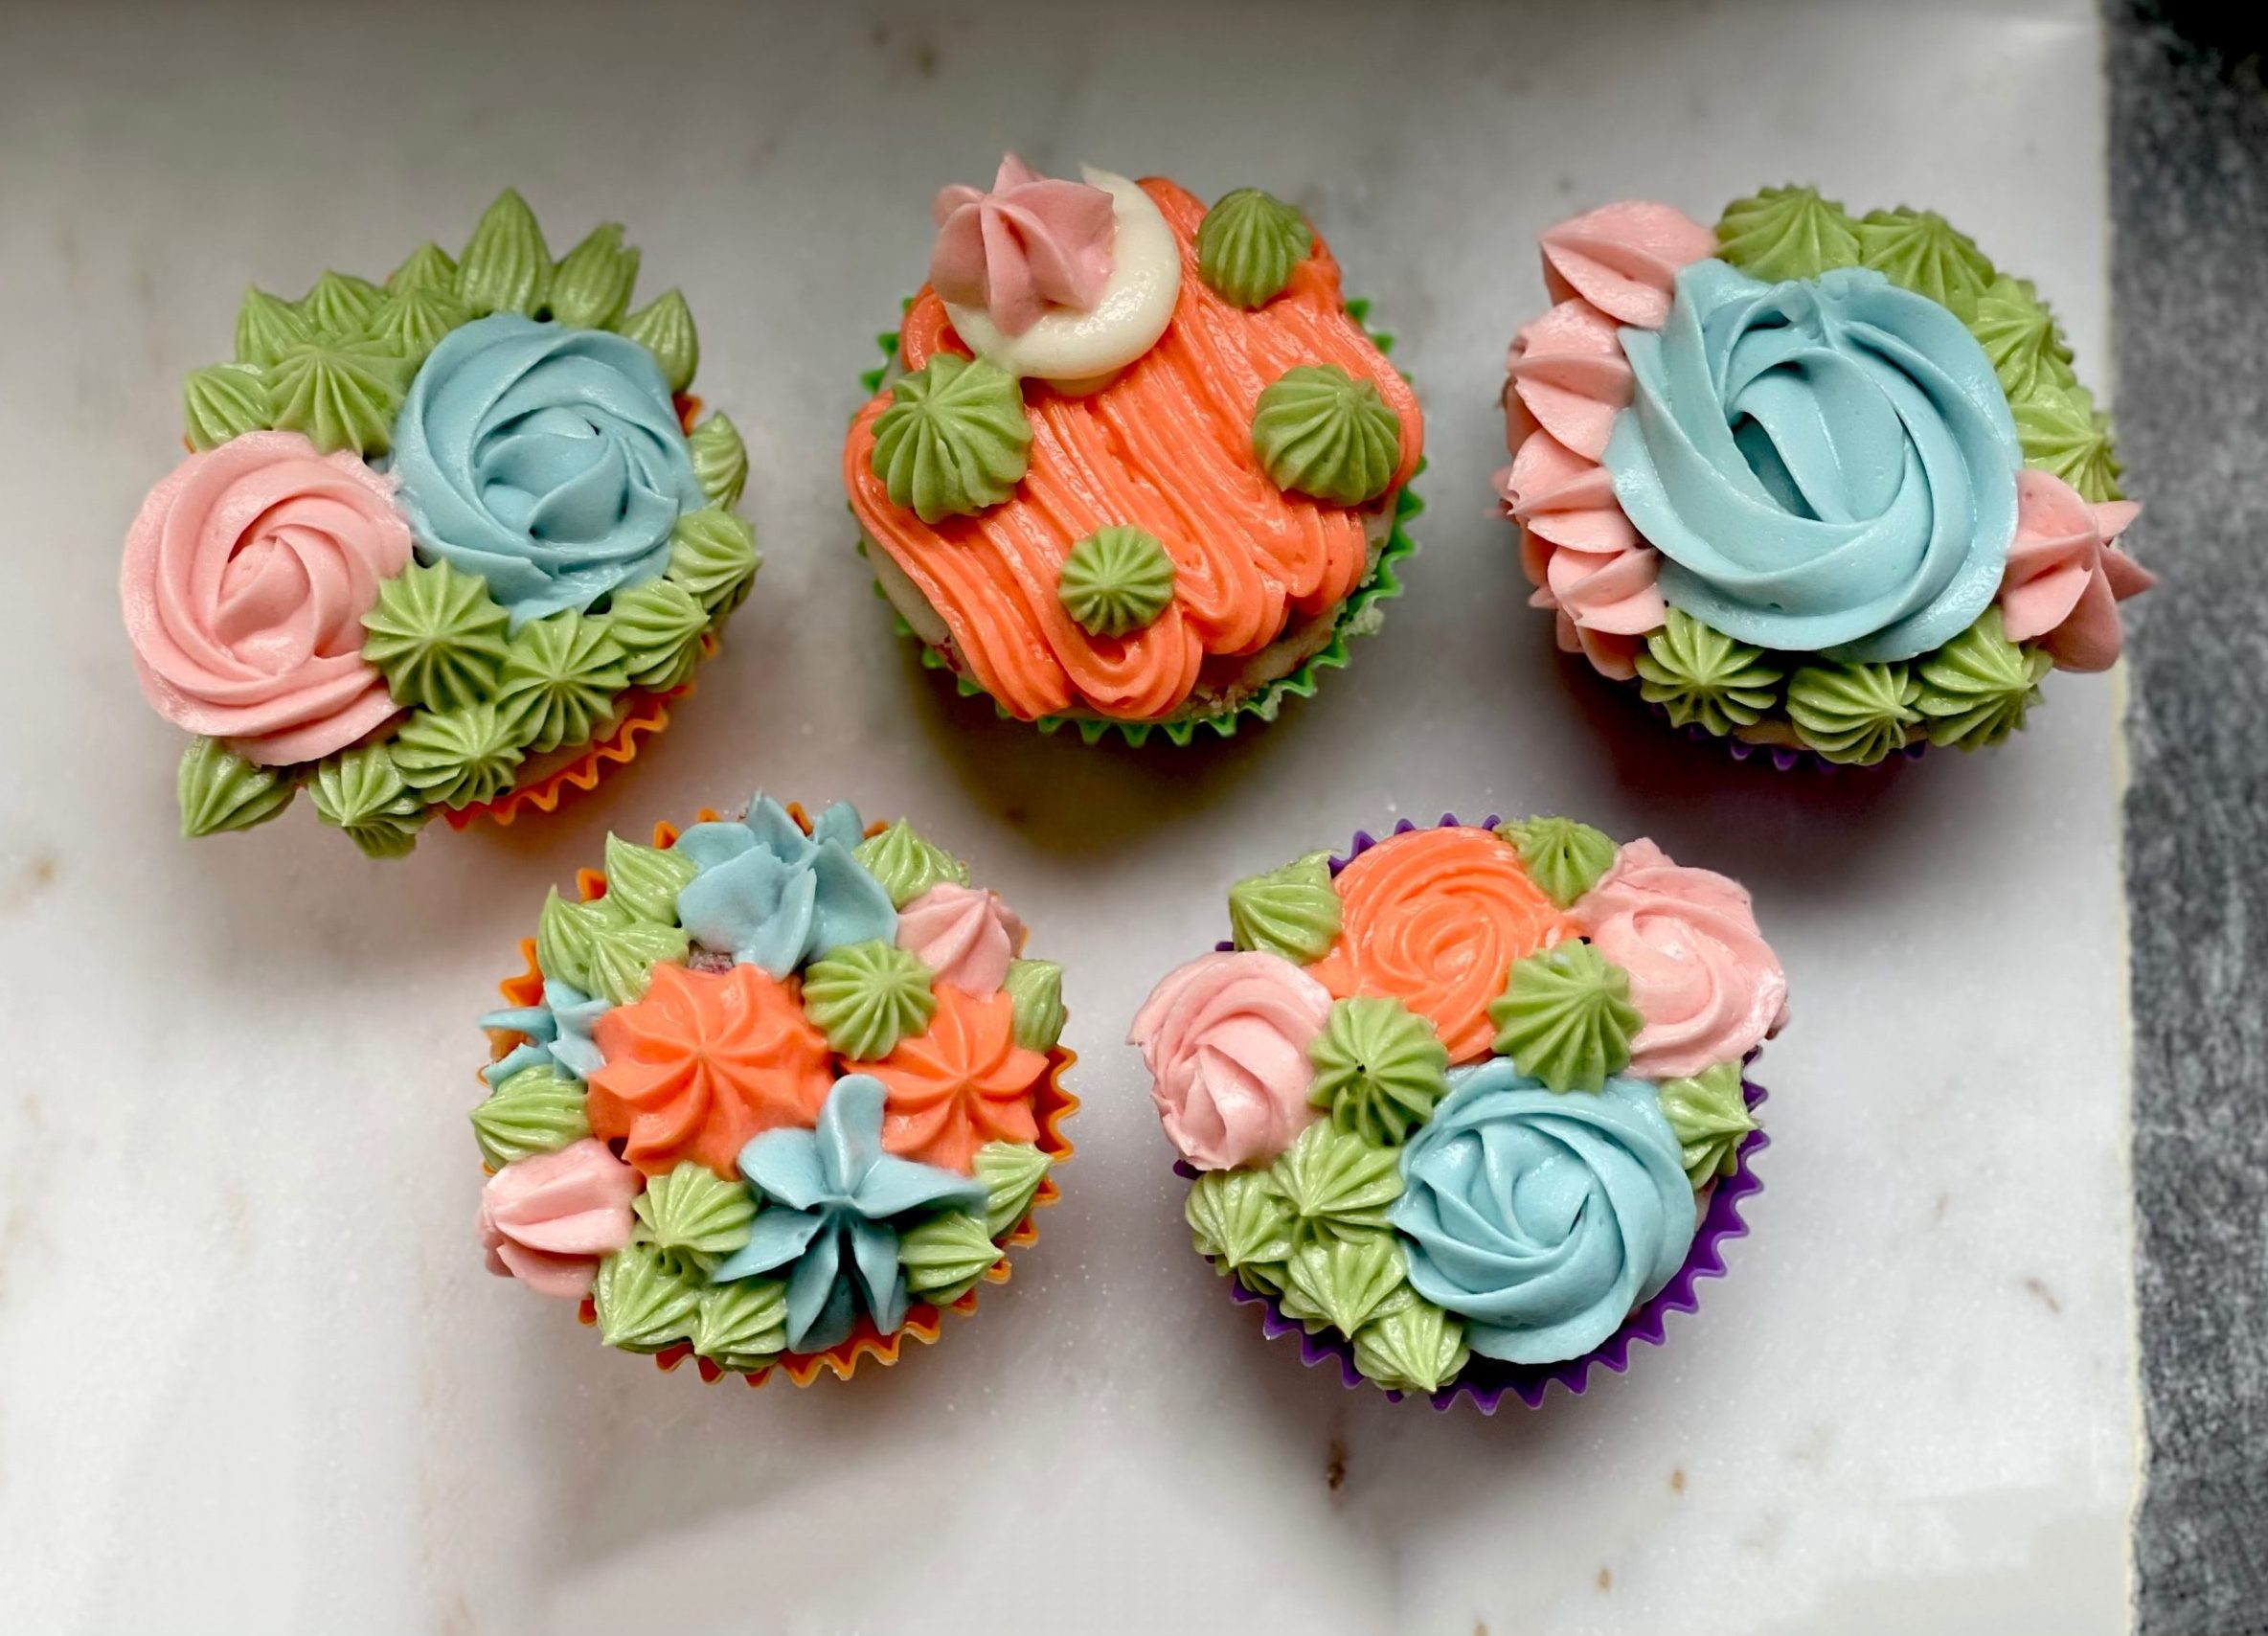 SpringThemed Cupcakes Baked in 'Boken